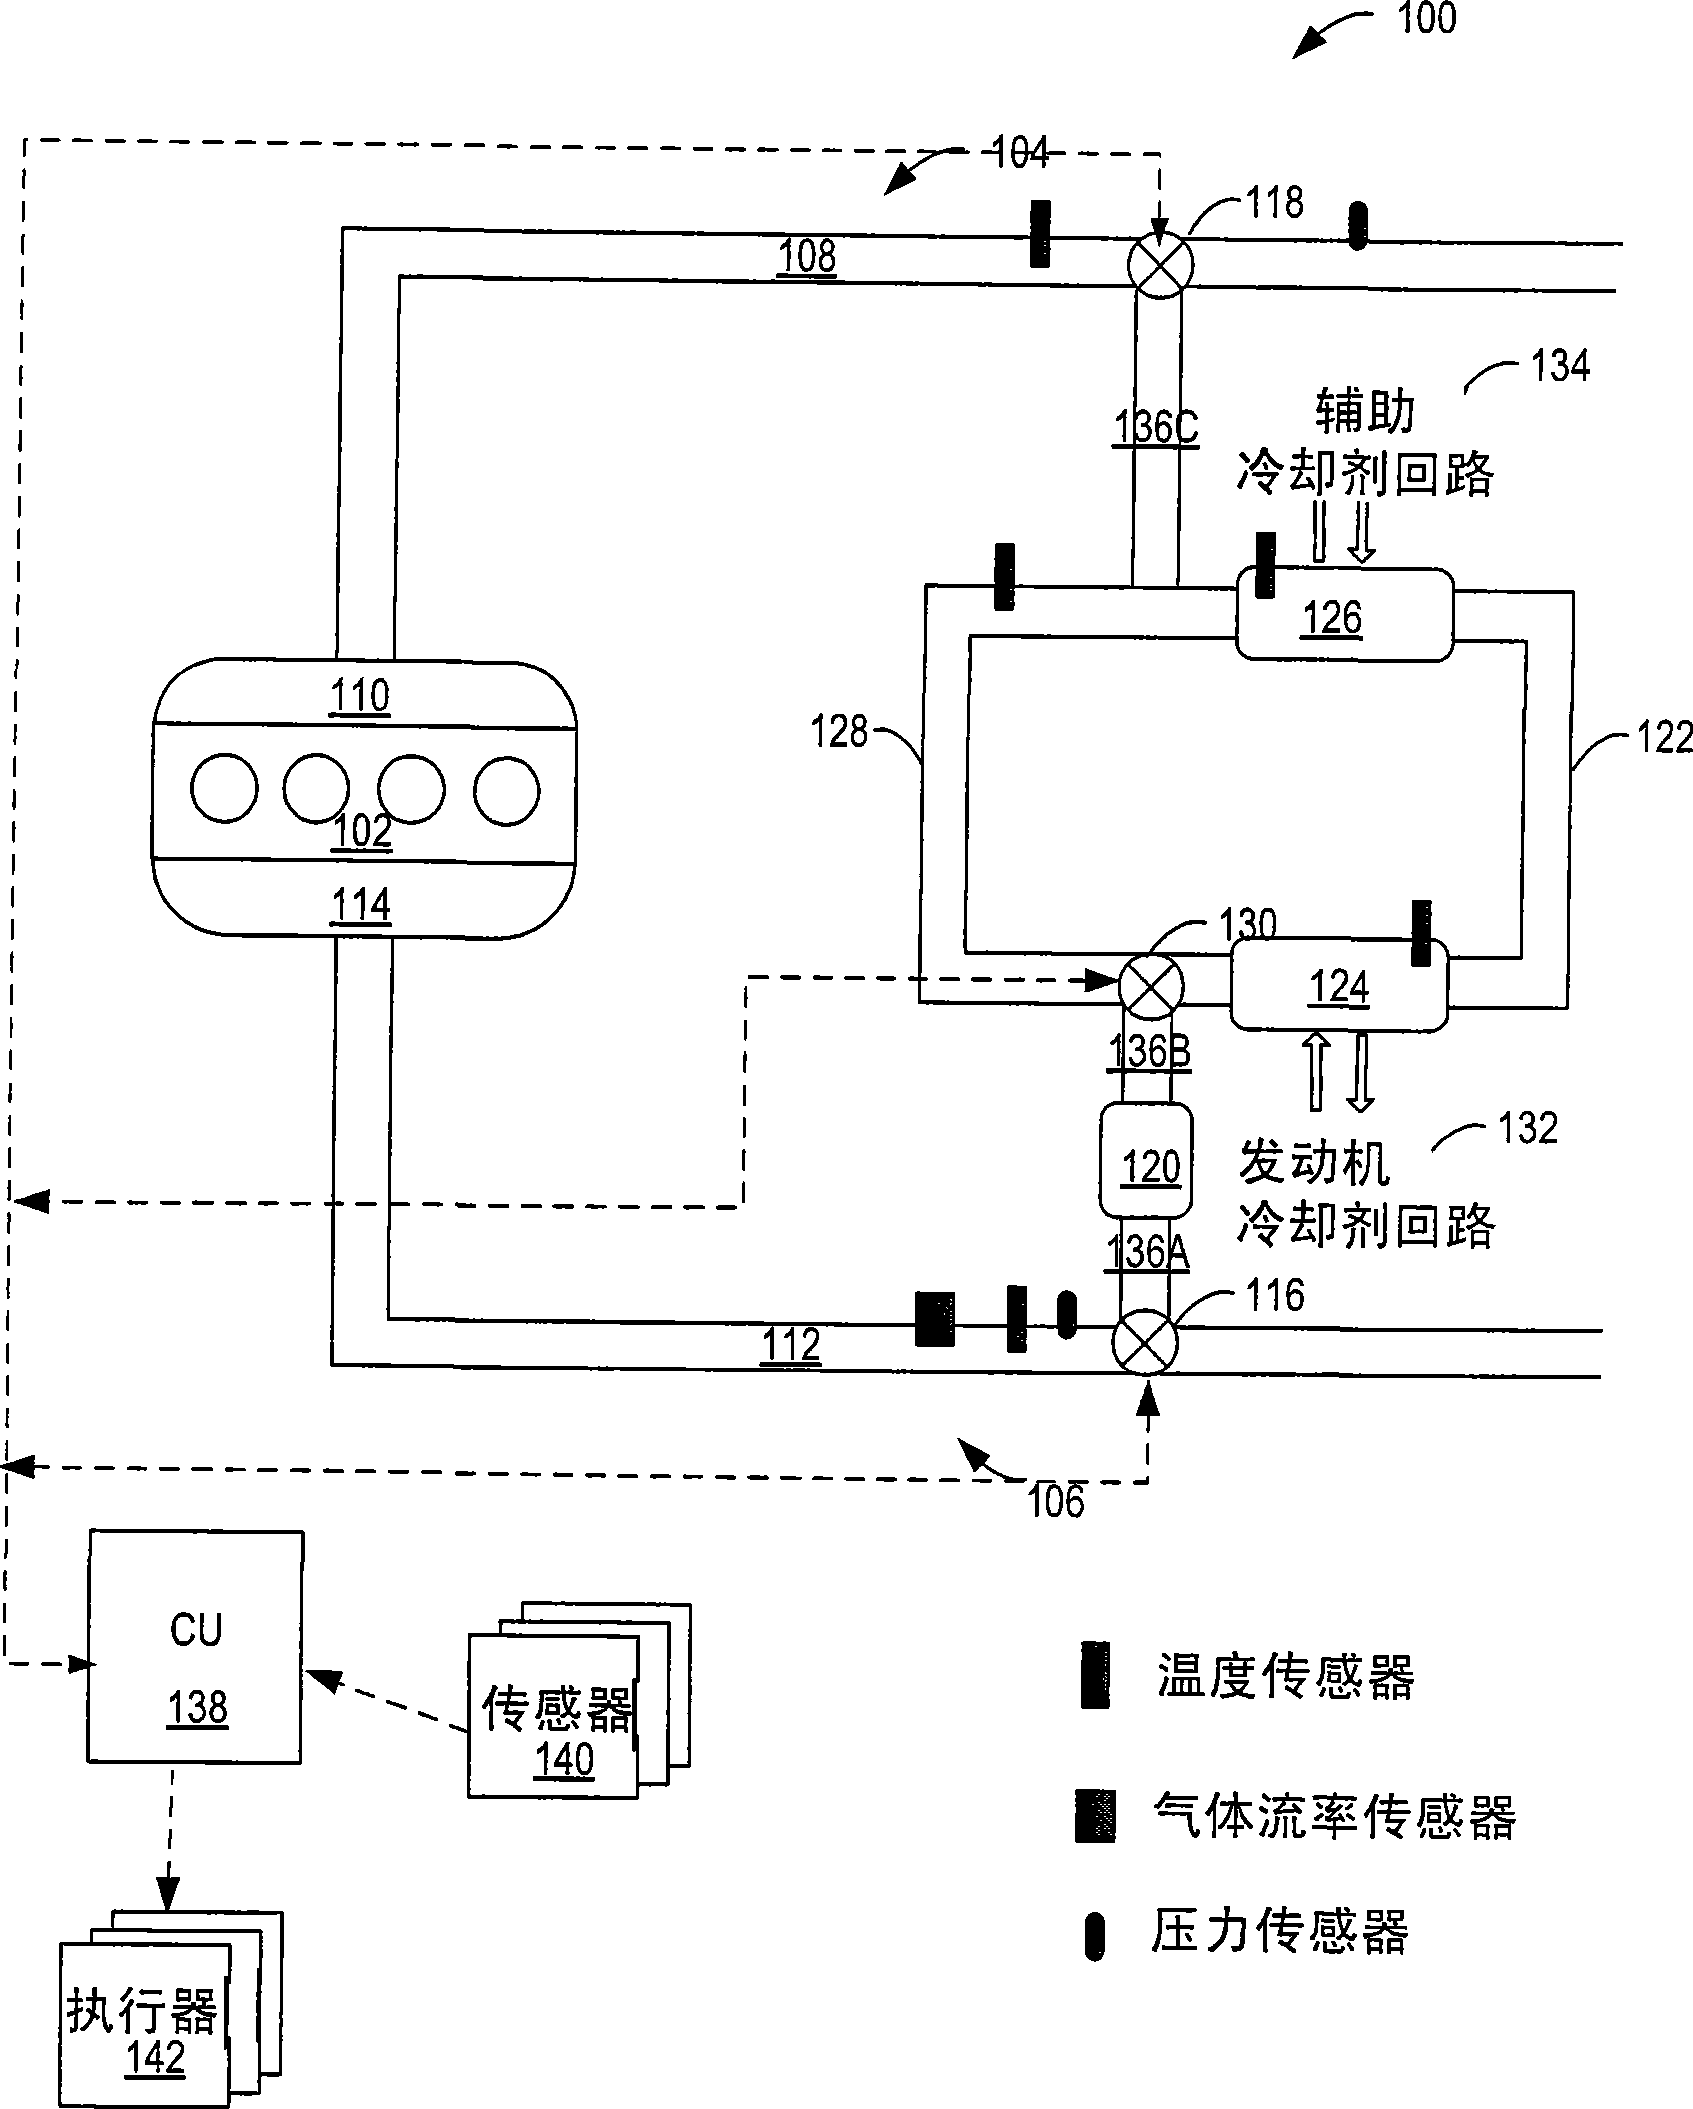 EGR cooling system with multiple EGR coolers